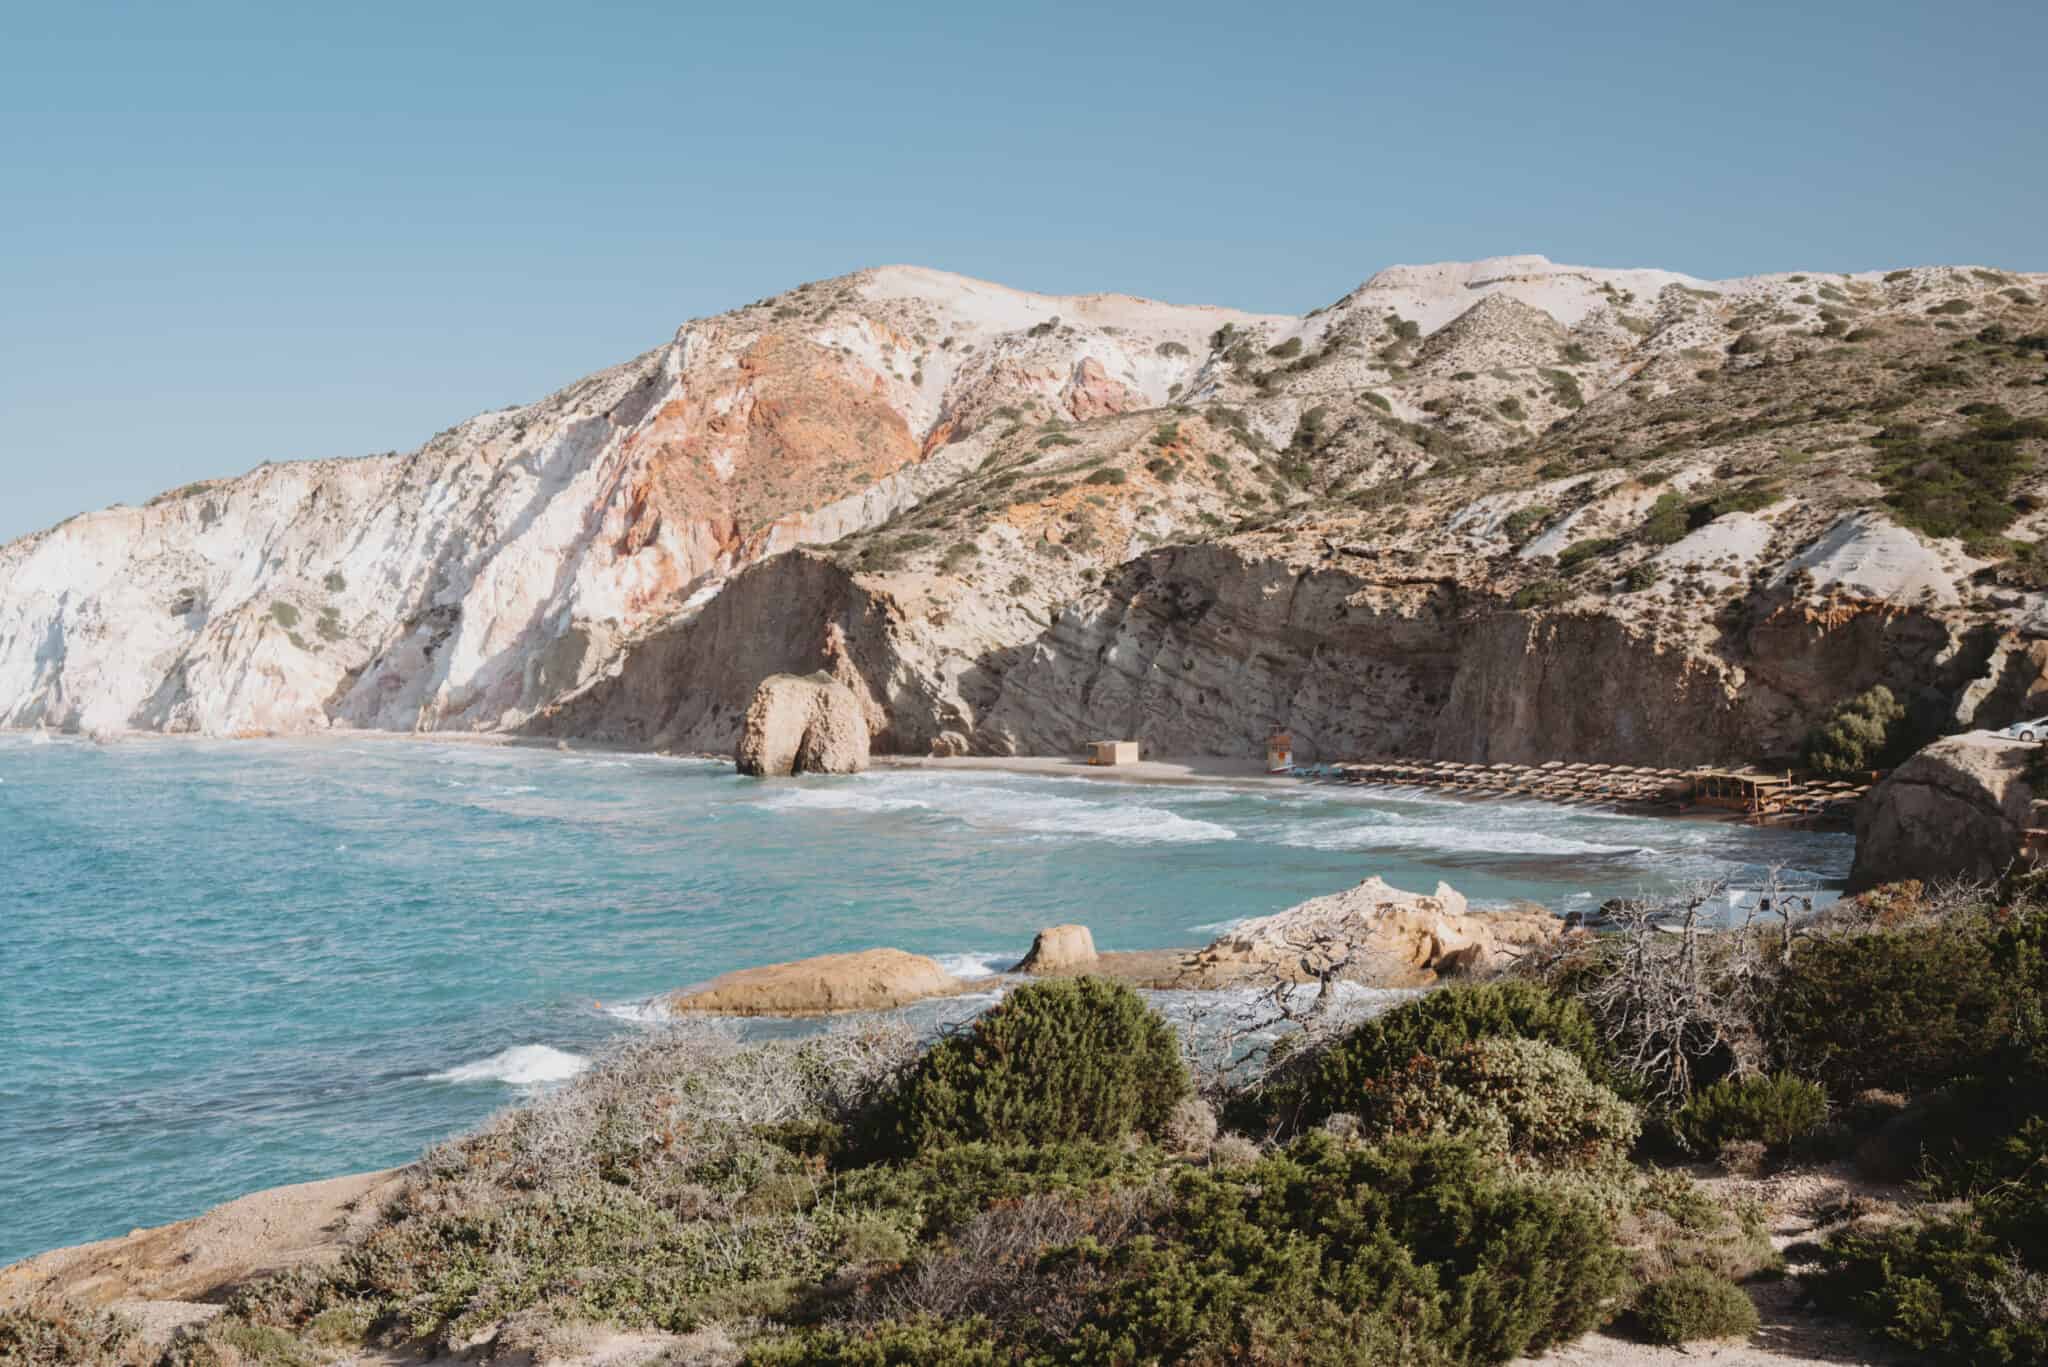 The cliffs of Crete overlooking the Aegean Sea, Greece.